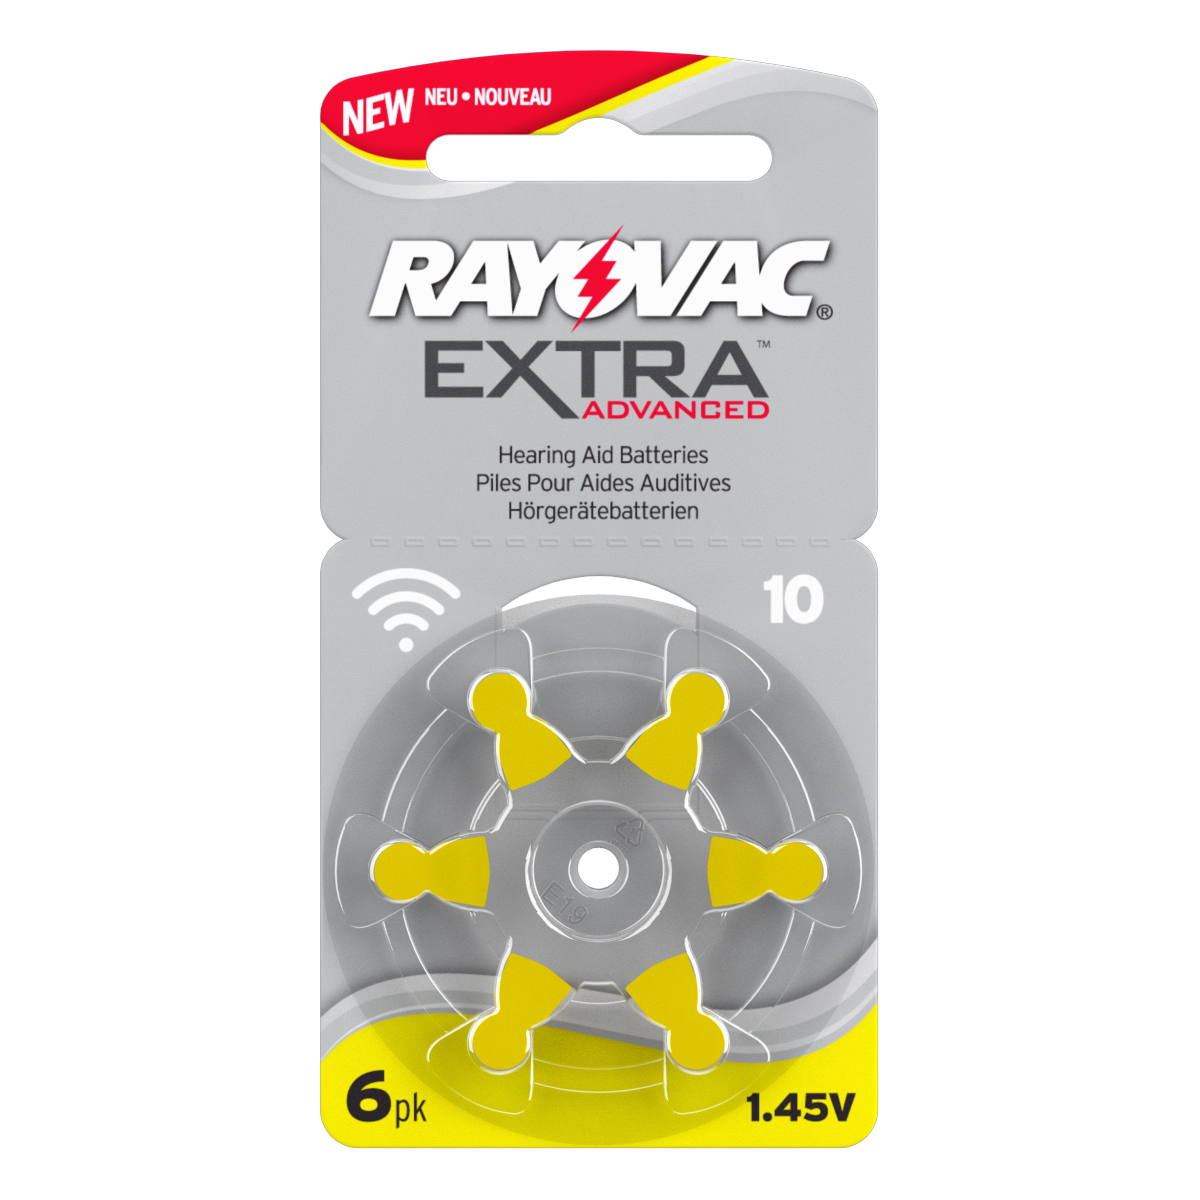 Rayovac Extra Advanced 60 pack Size 10